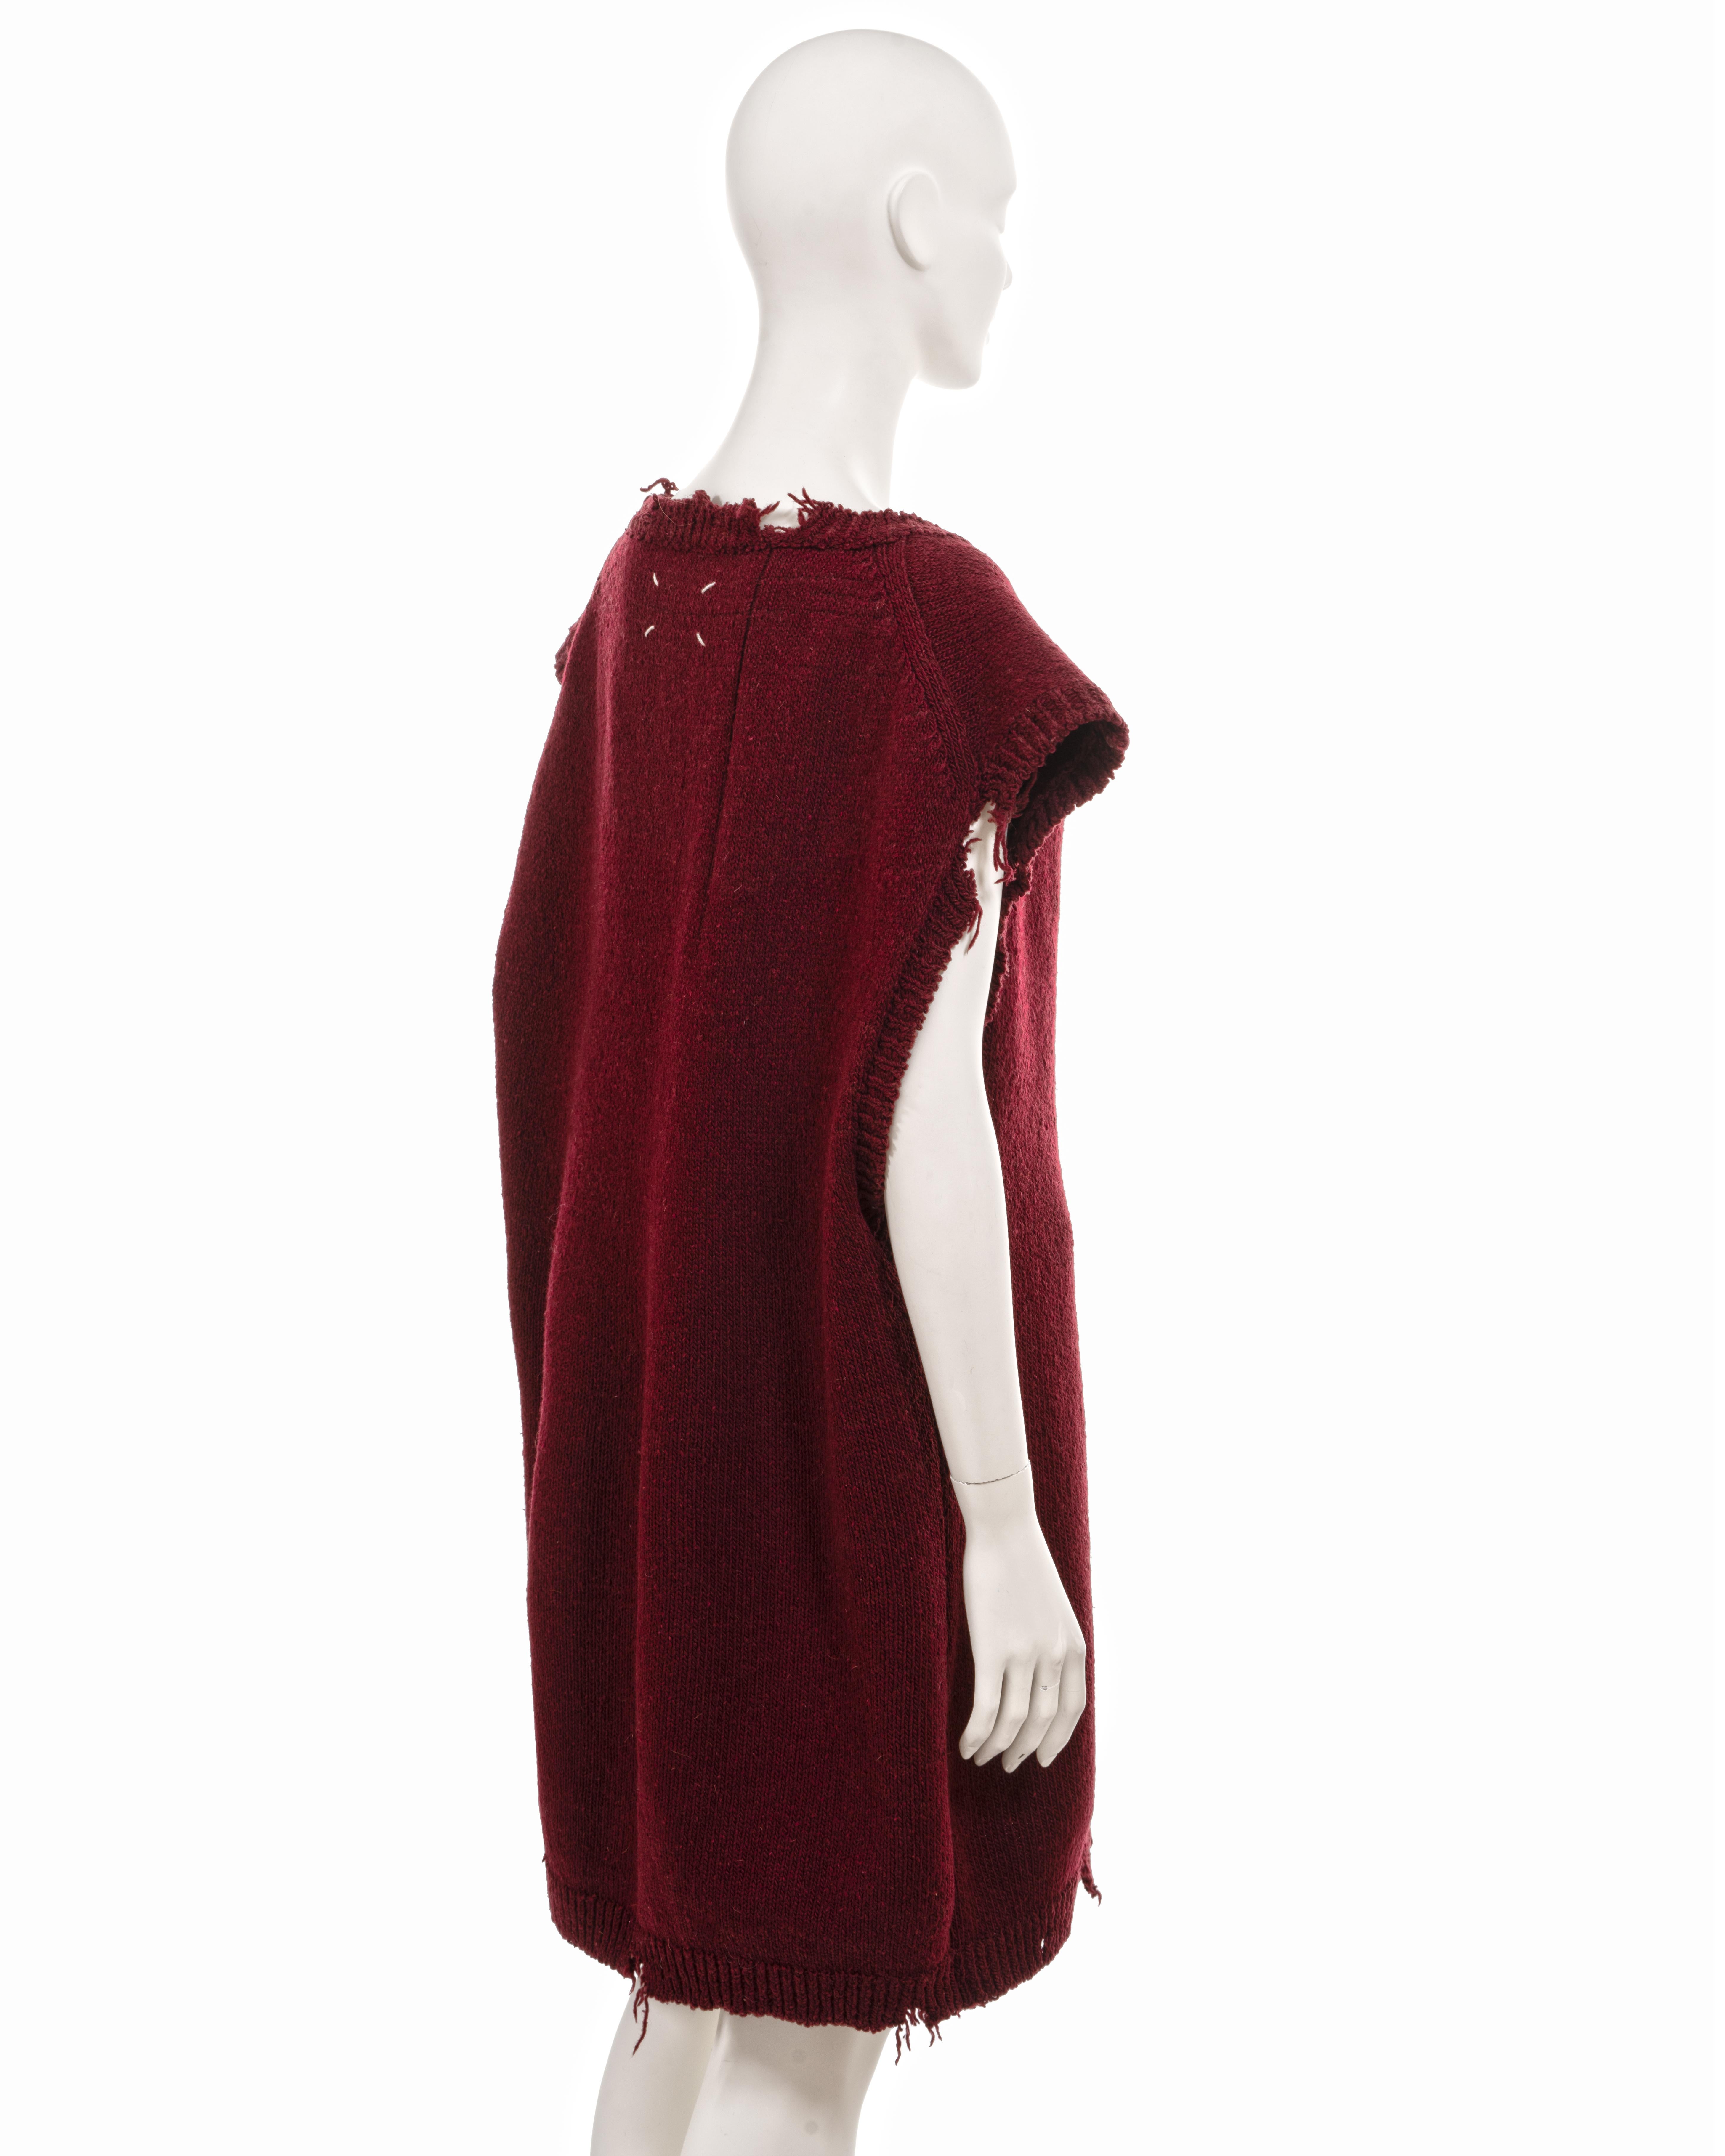 Martin Margiela oversized destroyed burgundy knitted sweater vest, fw 2000 For Sale 5